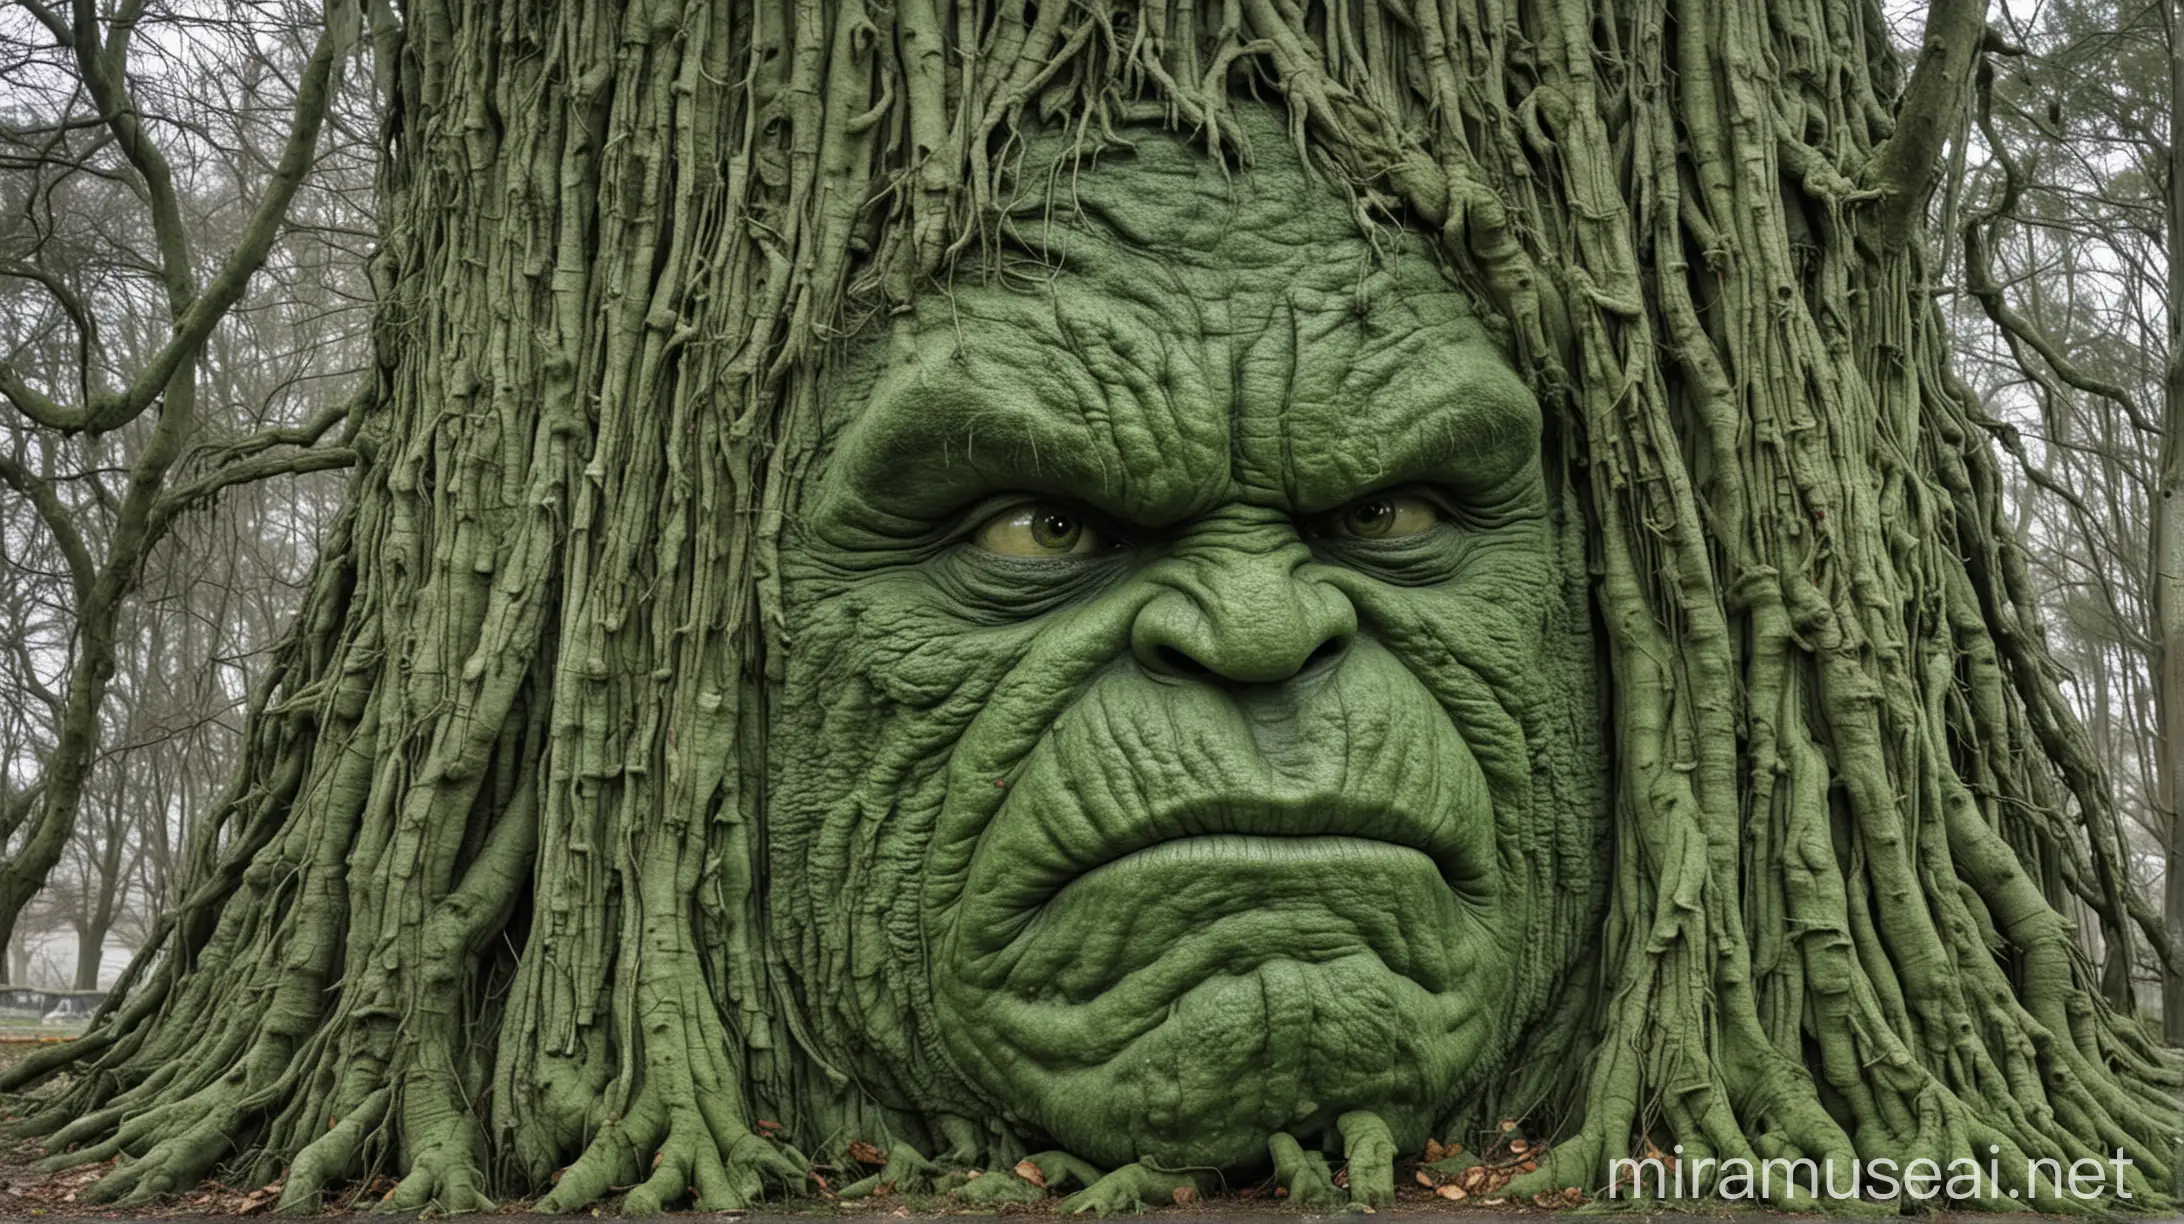 Giant Green Tree Evokes Hulks Presence in Natural Landscape